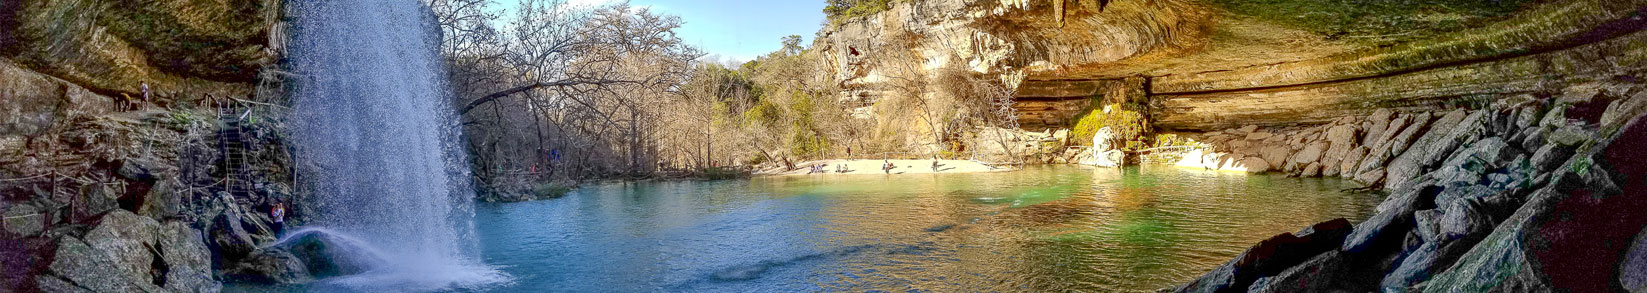 Hamilton Pool Preserve - Dripping Springs, Texas